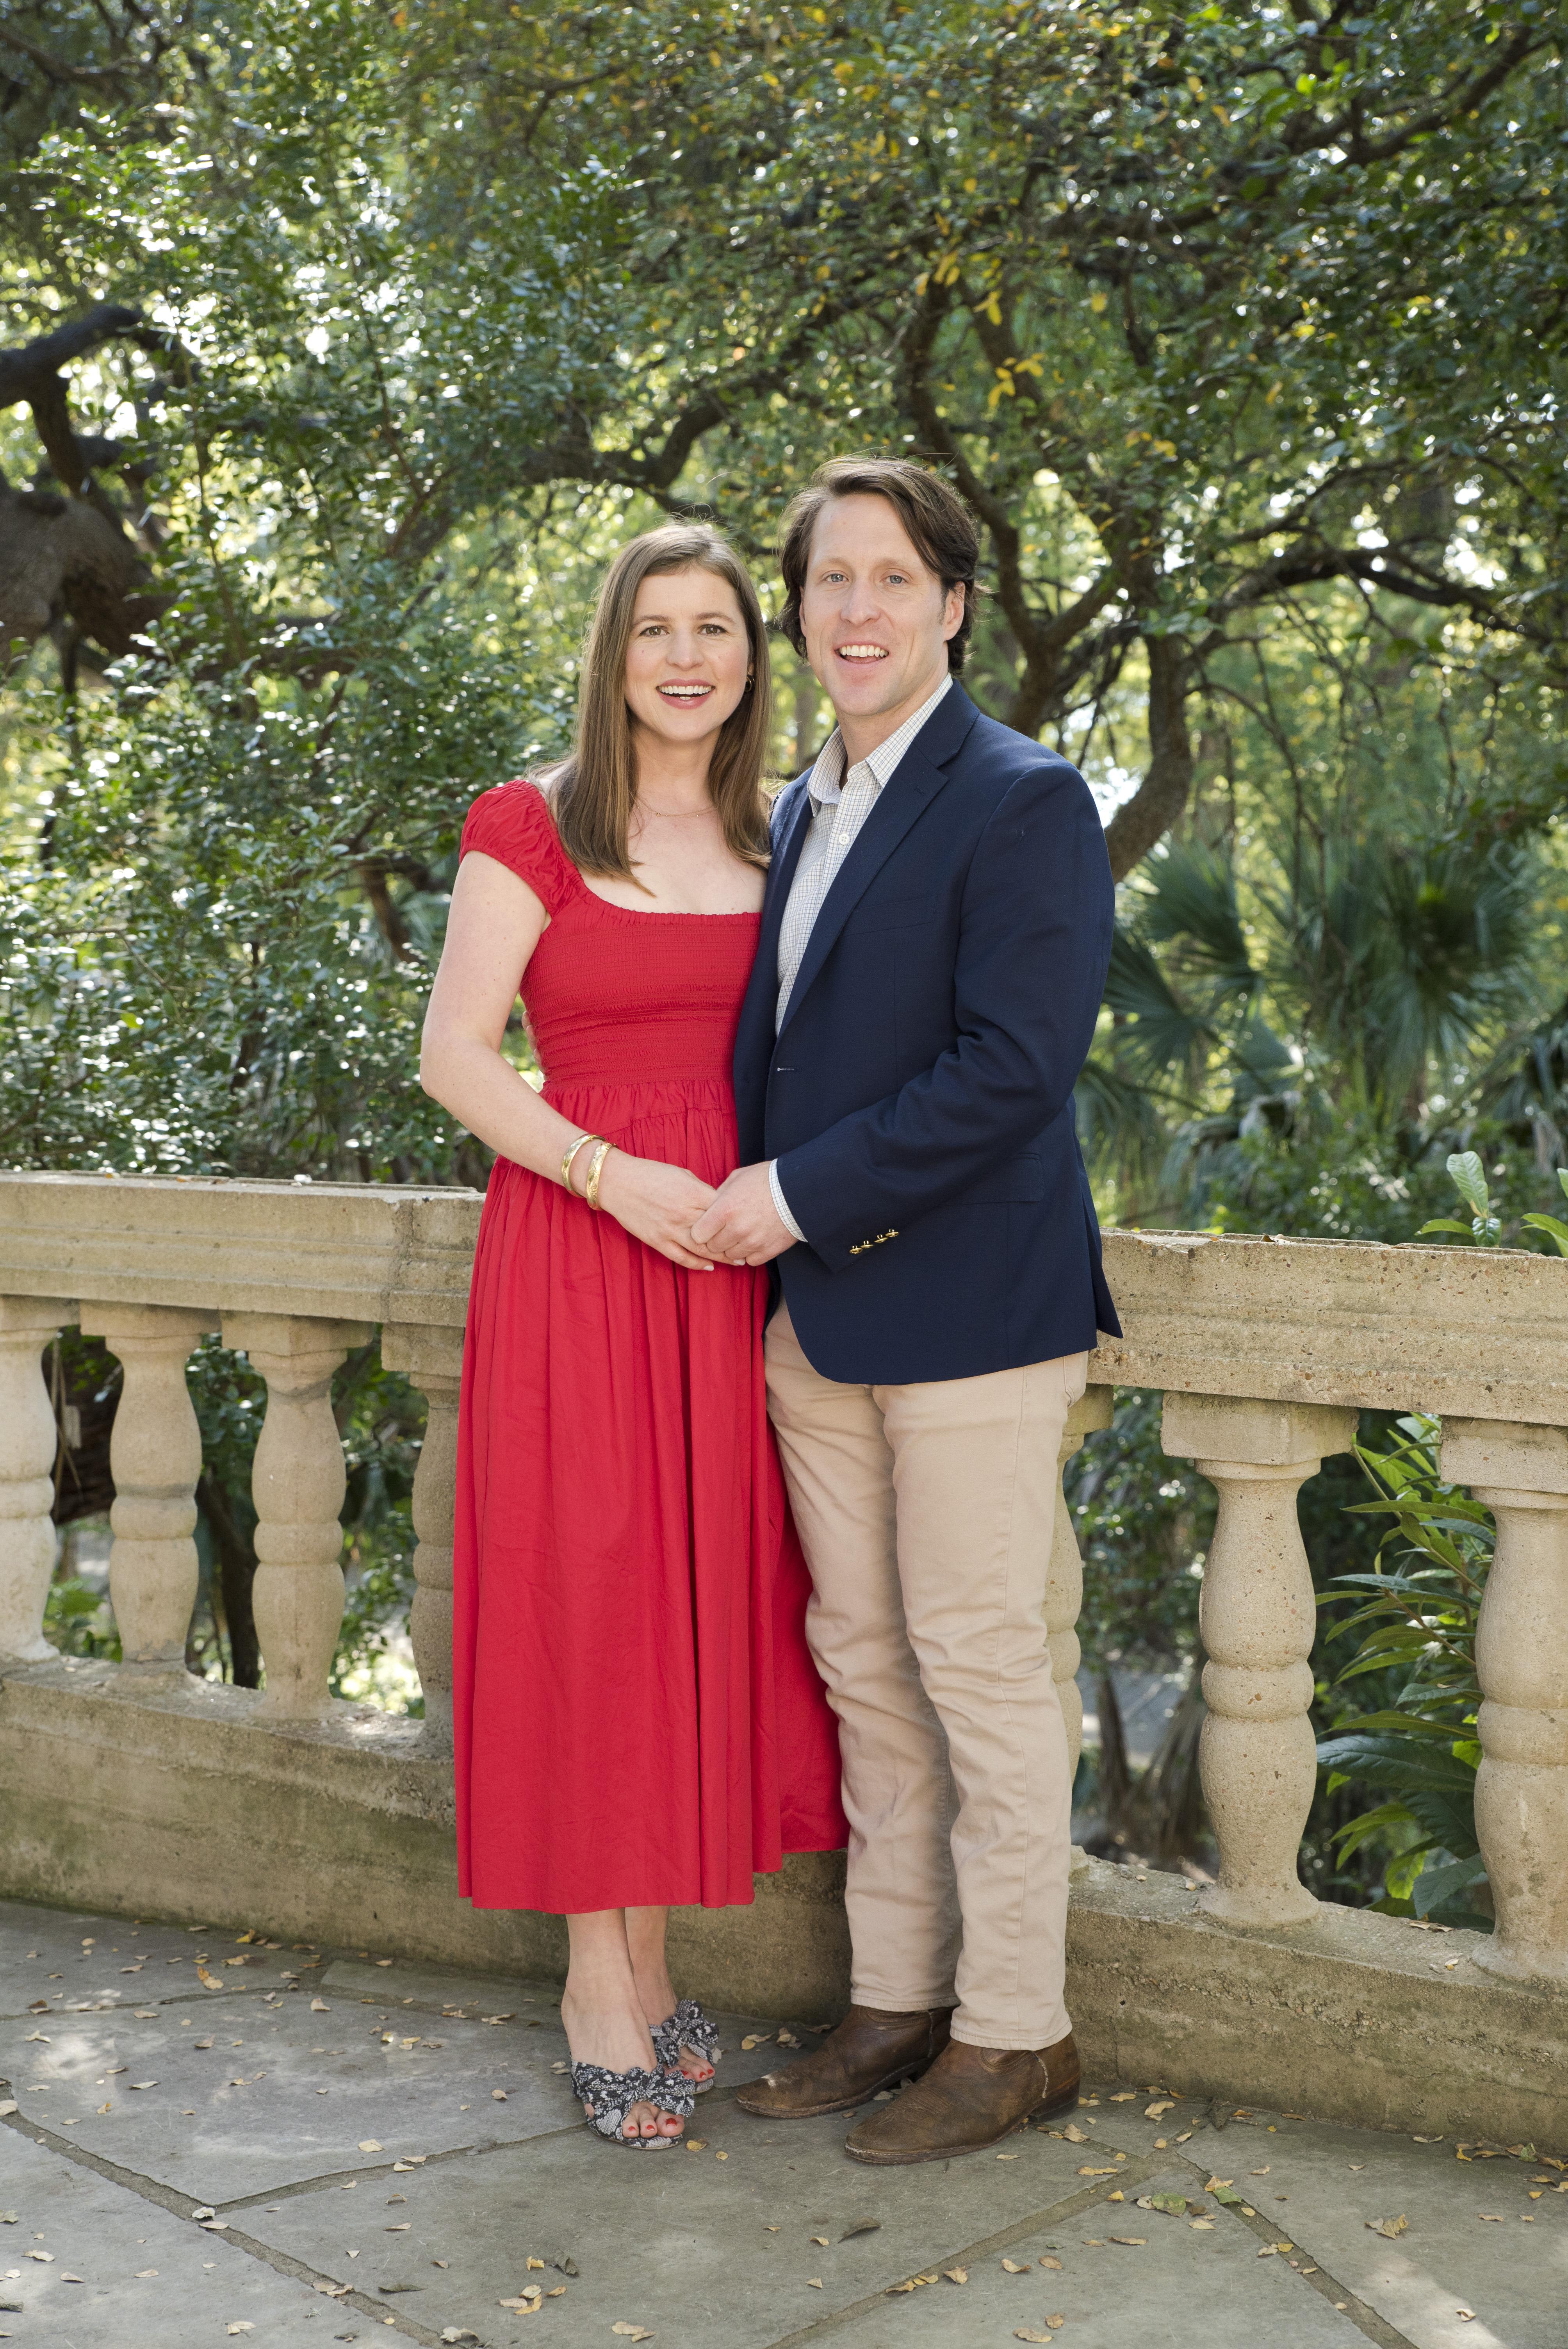 The Wedding Website of Caroline Hammond and Ben Cleveland